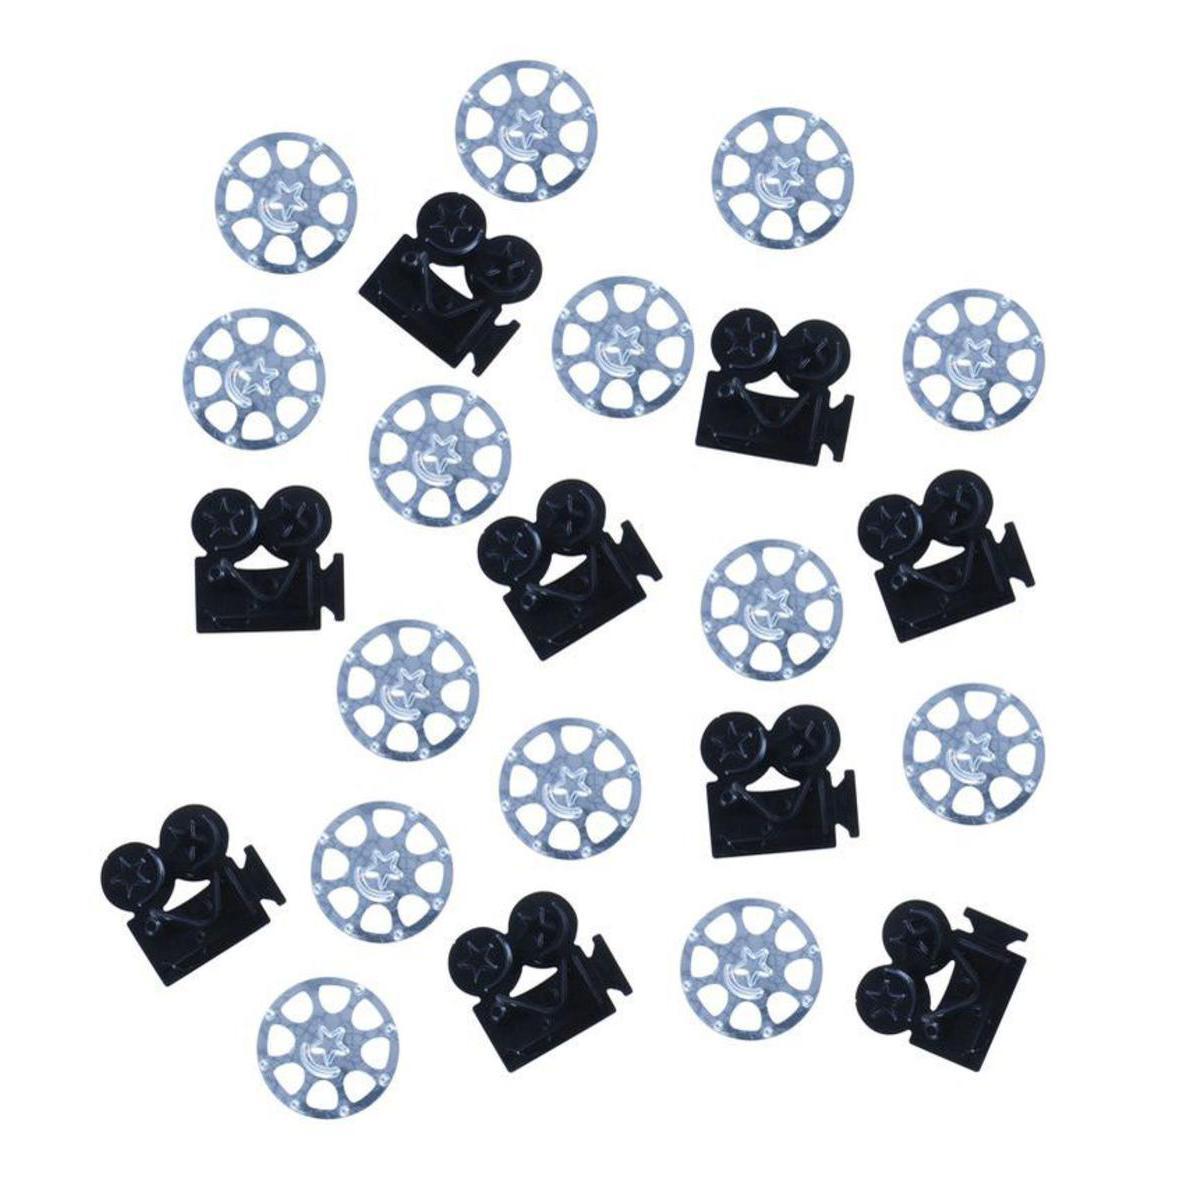 Confettis de table cinéma en plastique - 10 g - Multicolore